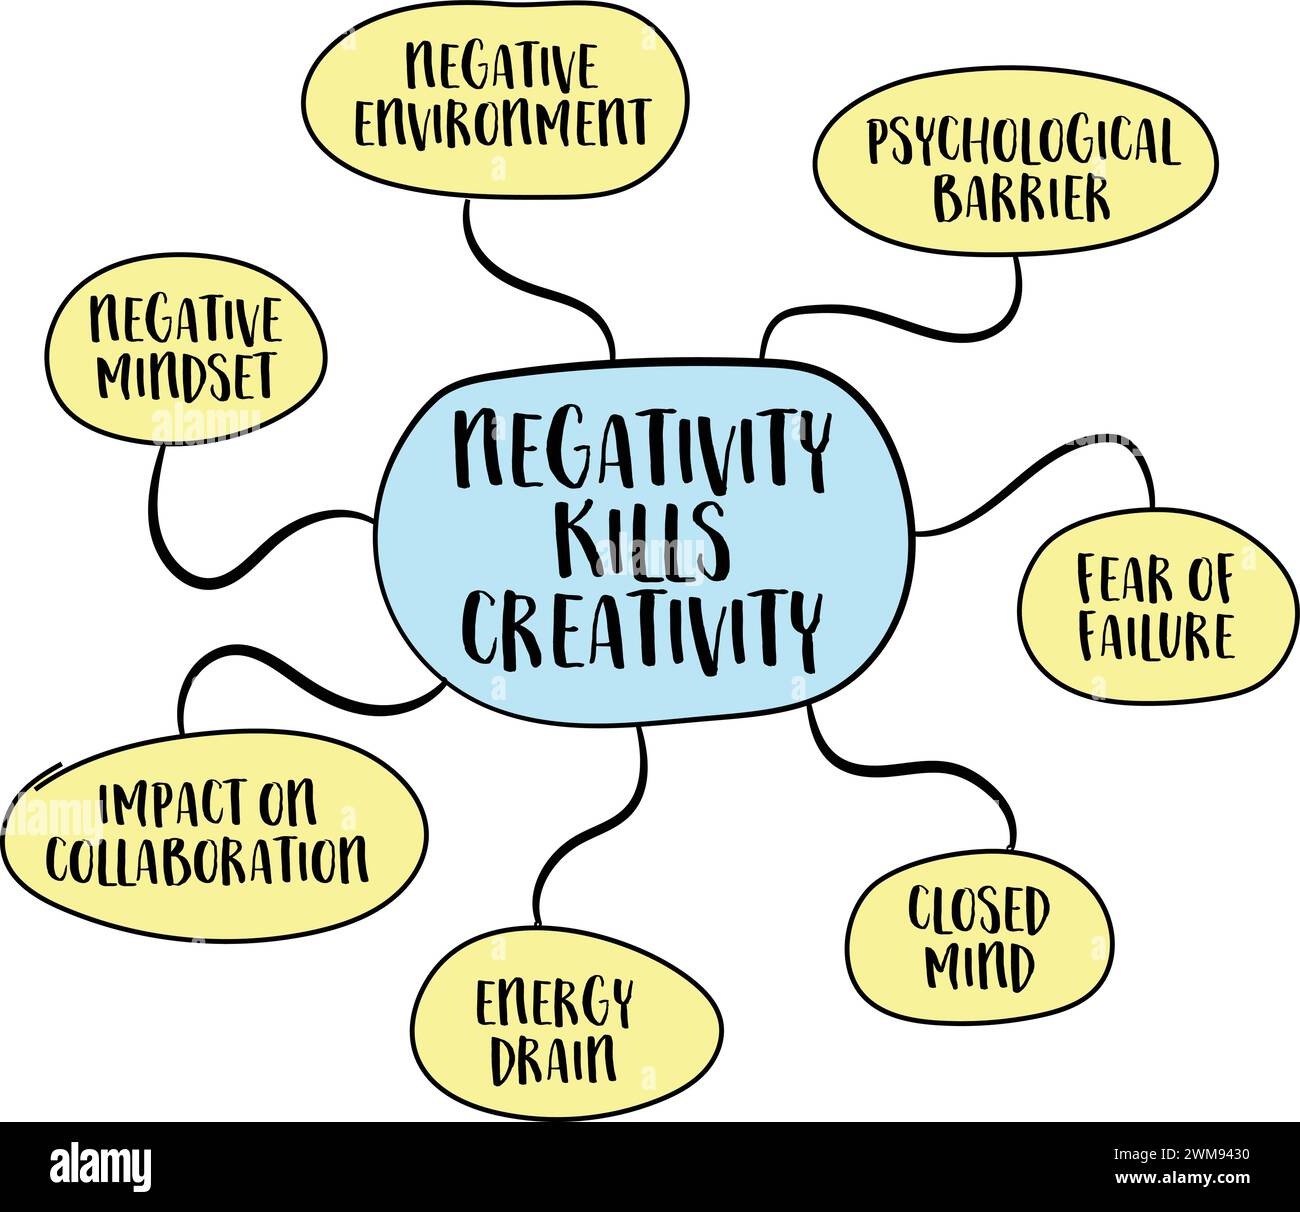 Negativität tötet Kreativität Mindmap-Skizze, negative Mindset und Umgebung, Angst vor Versagen Konzept Stock Vektor